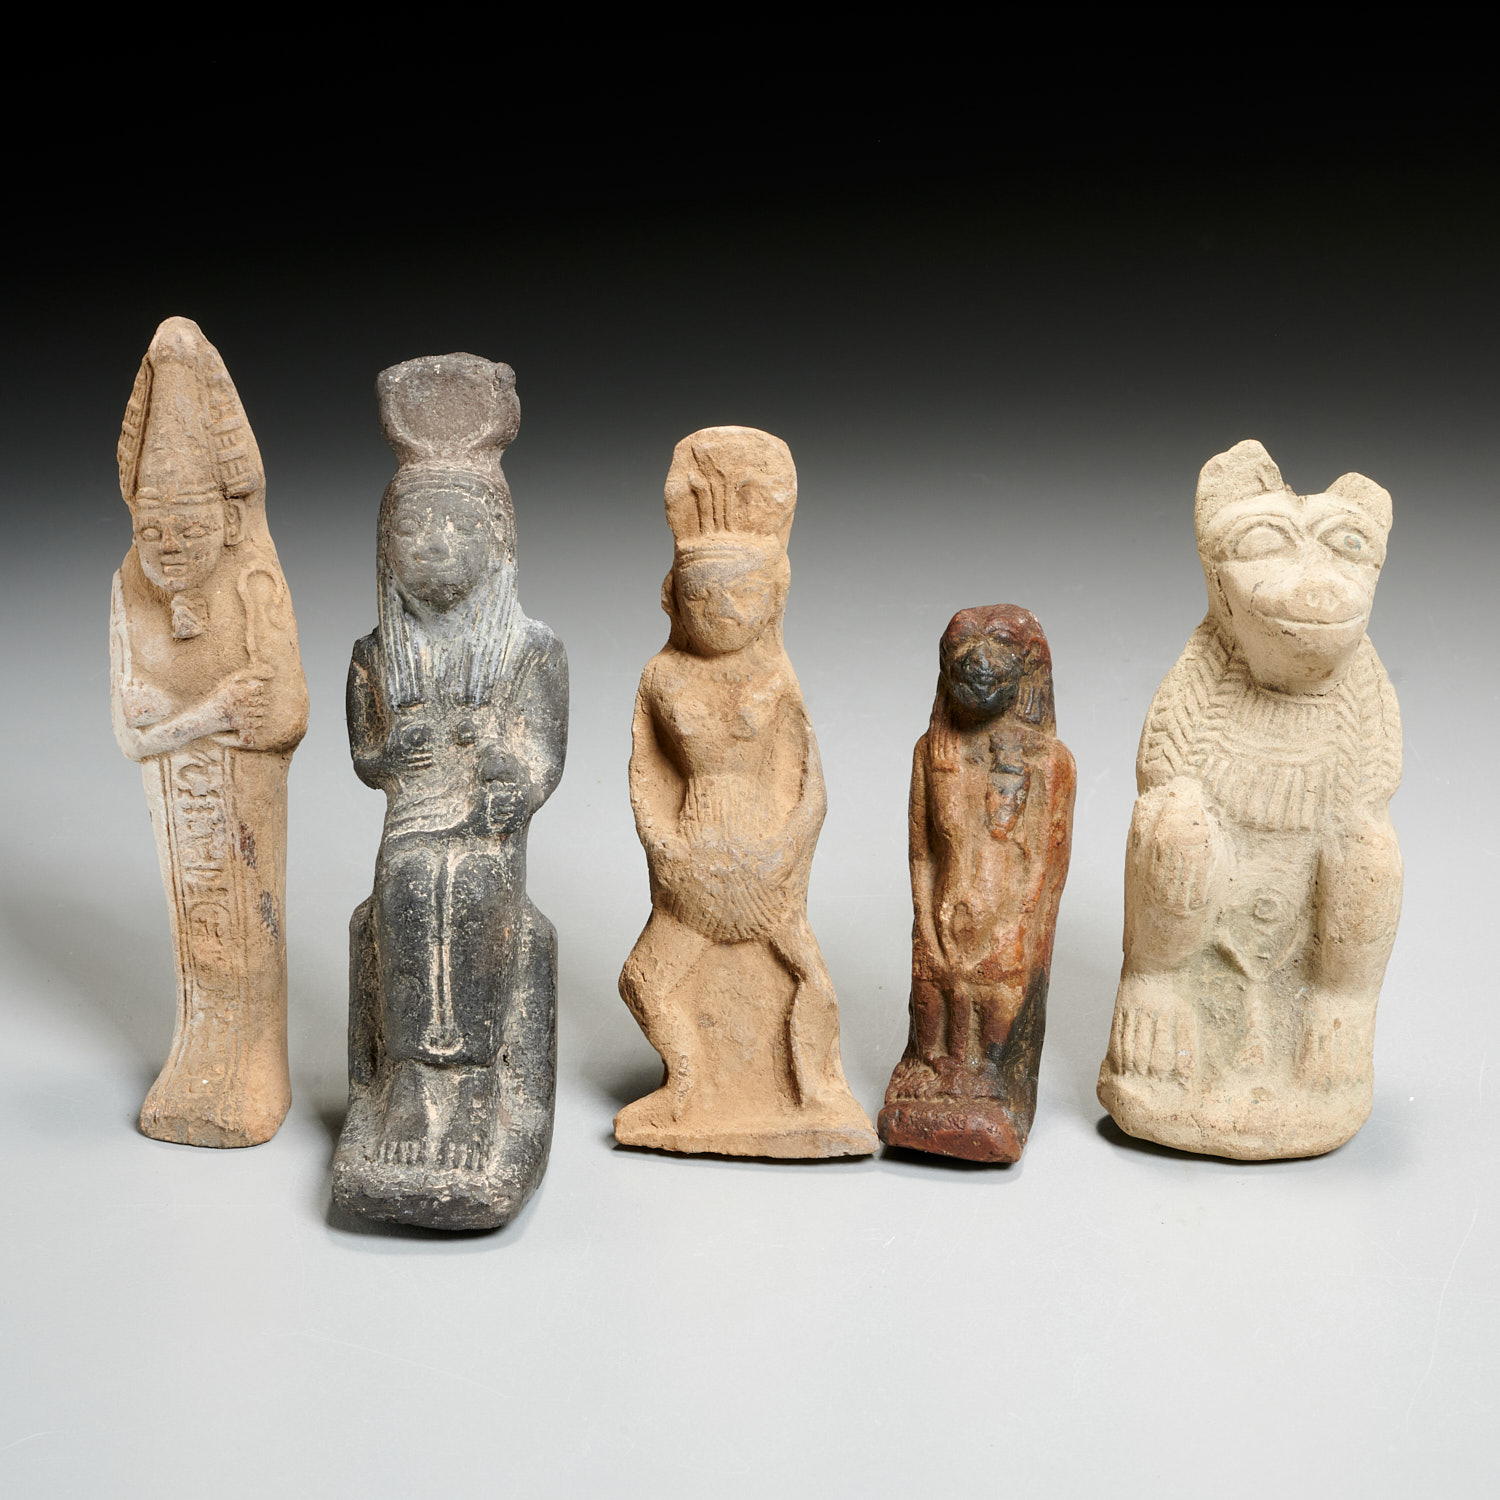  5 ANCIENT EGYPTIAN FIGURES EX MUSEUM 2ce9d1